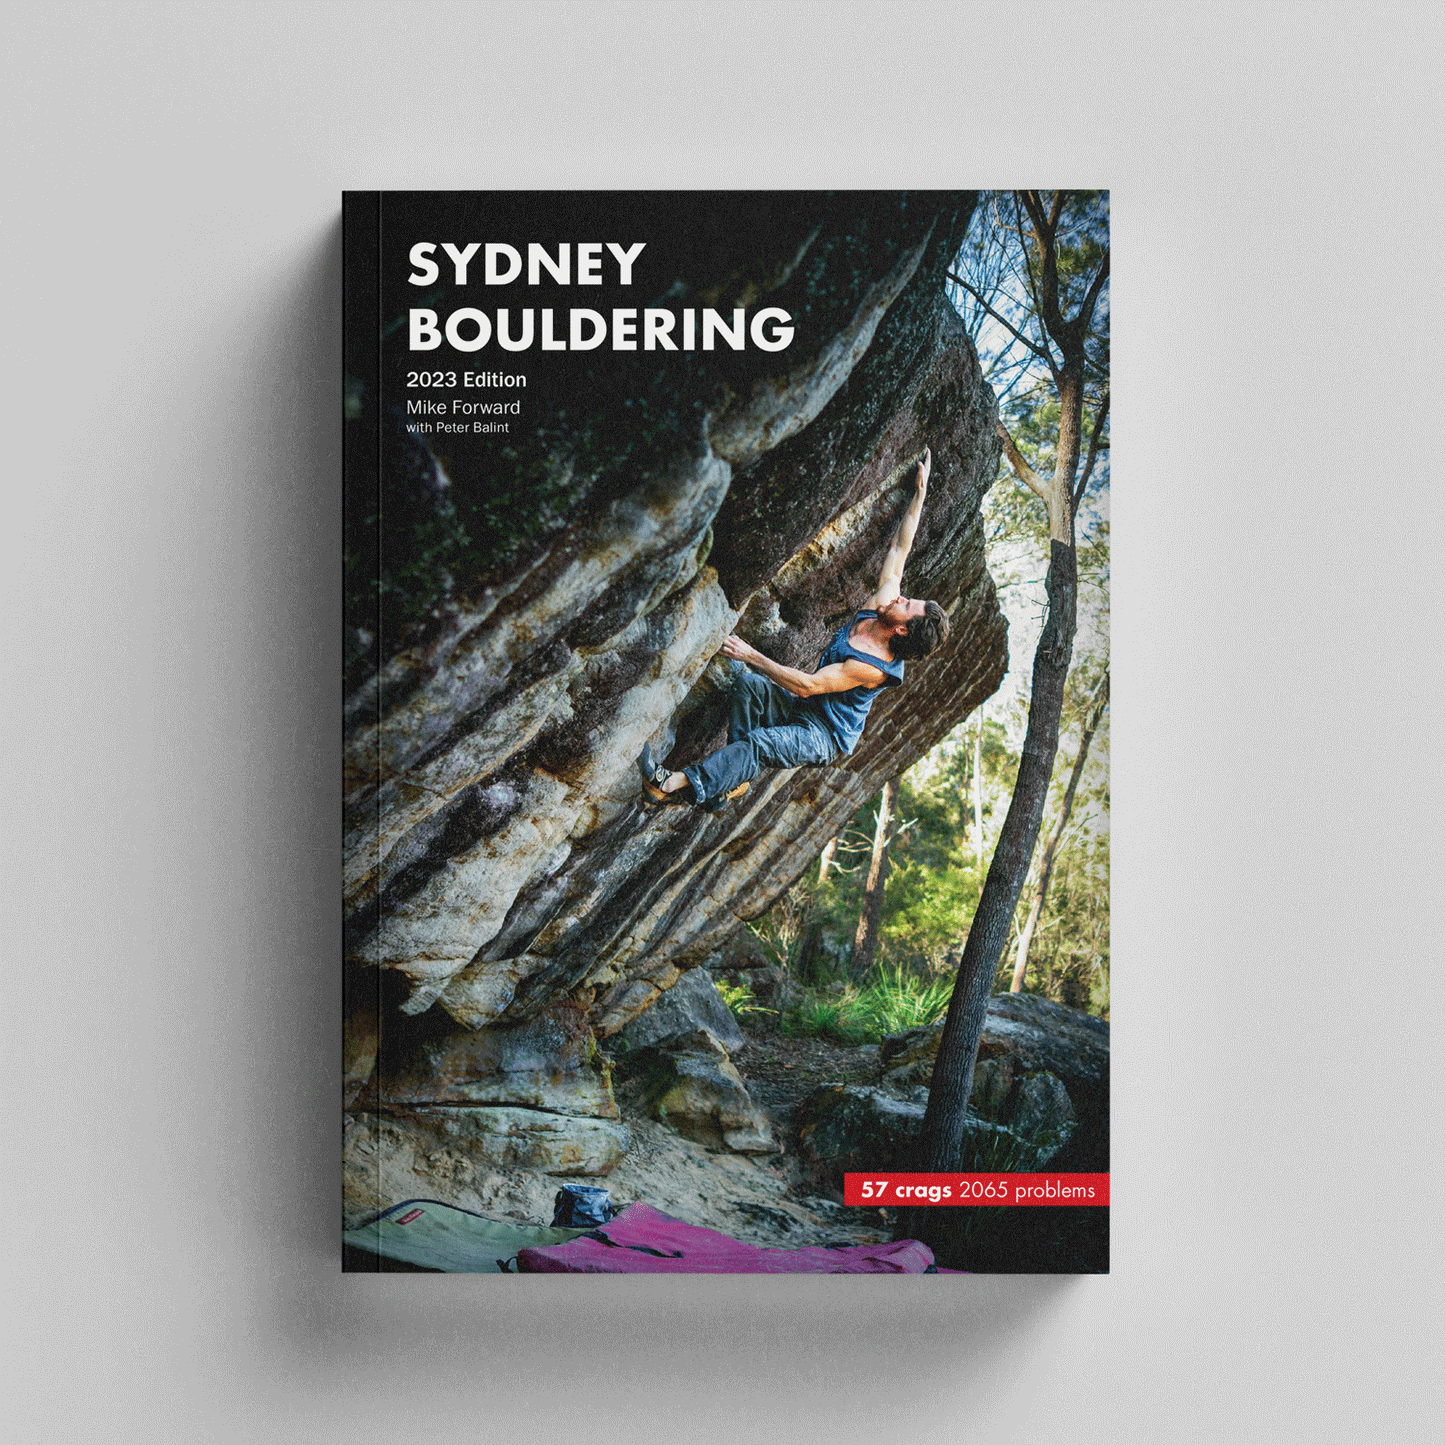 Sydney Bouldering Guide 2023 edition